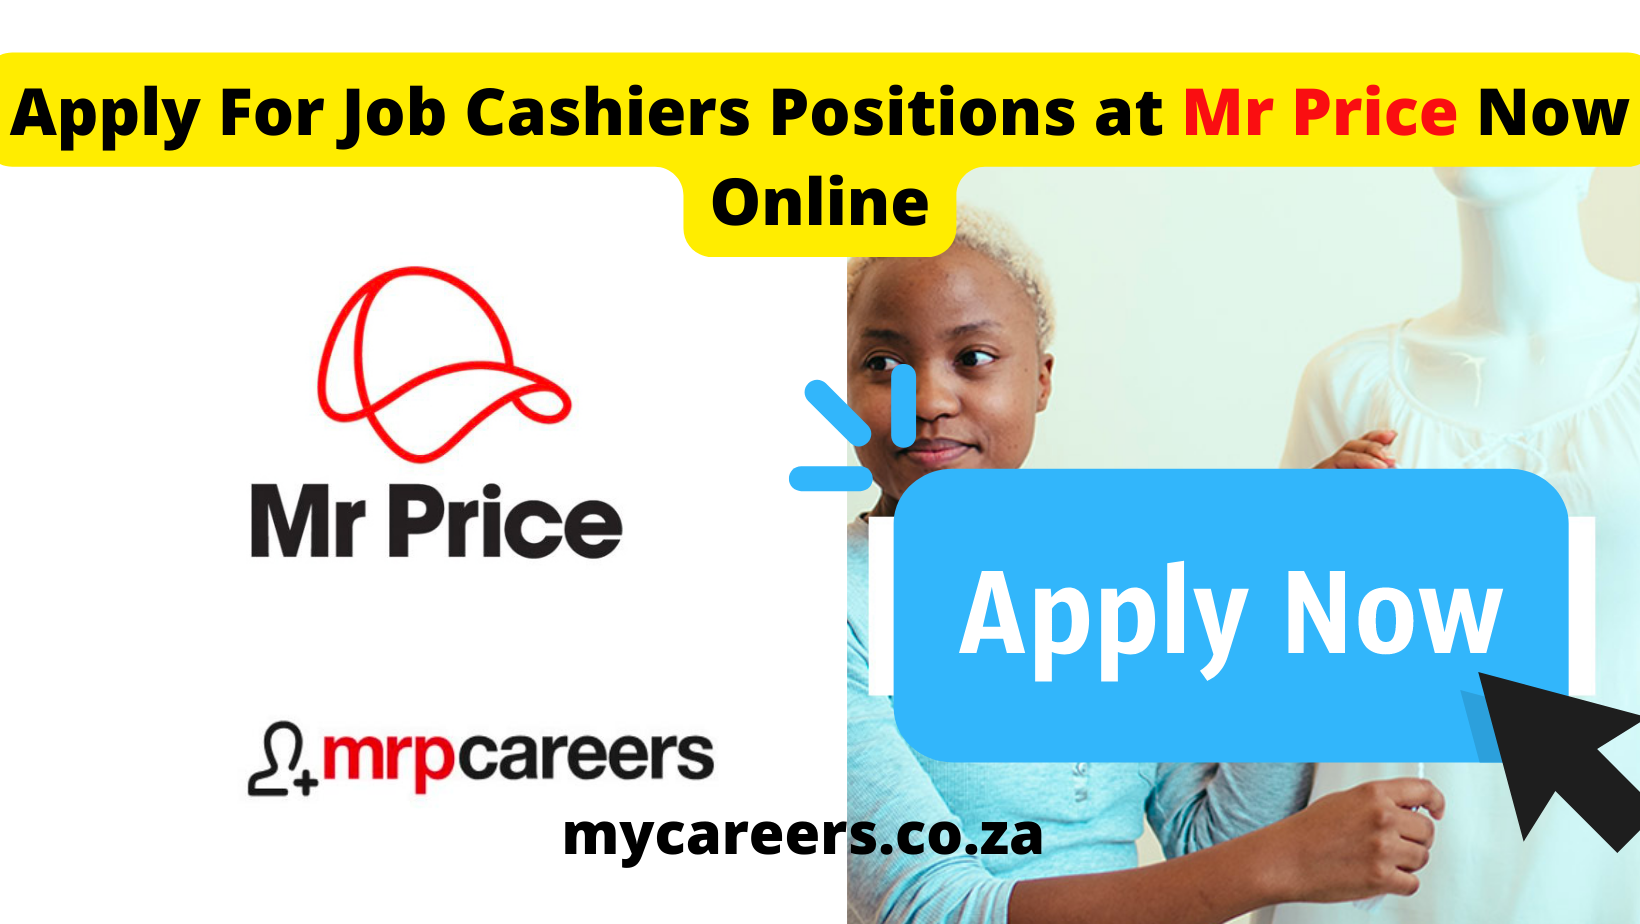 Mr Price Cashier Jobs and Mr Price Jobs Hiring 